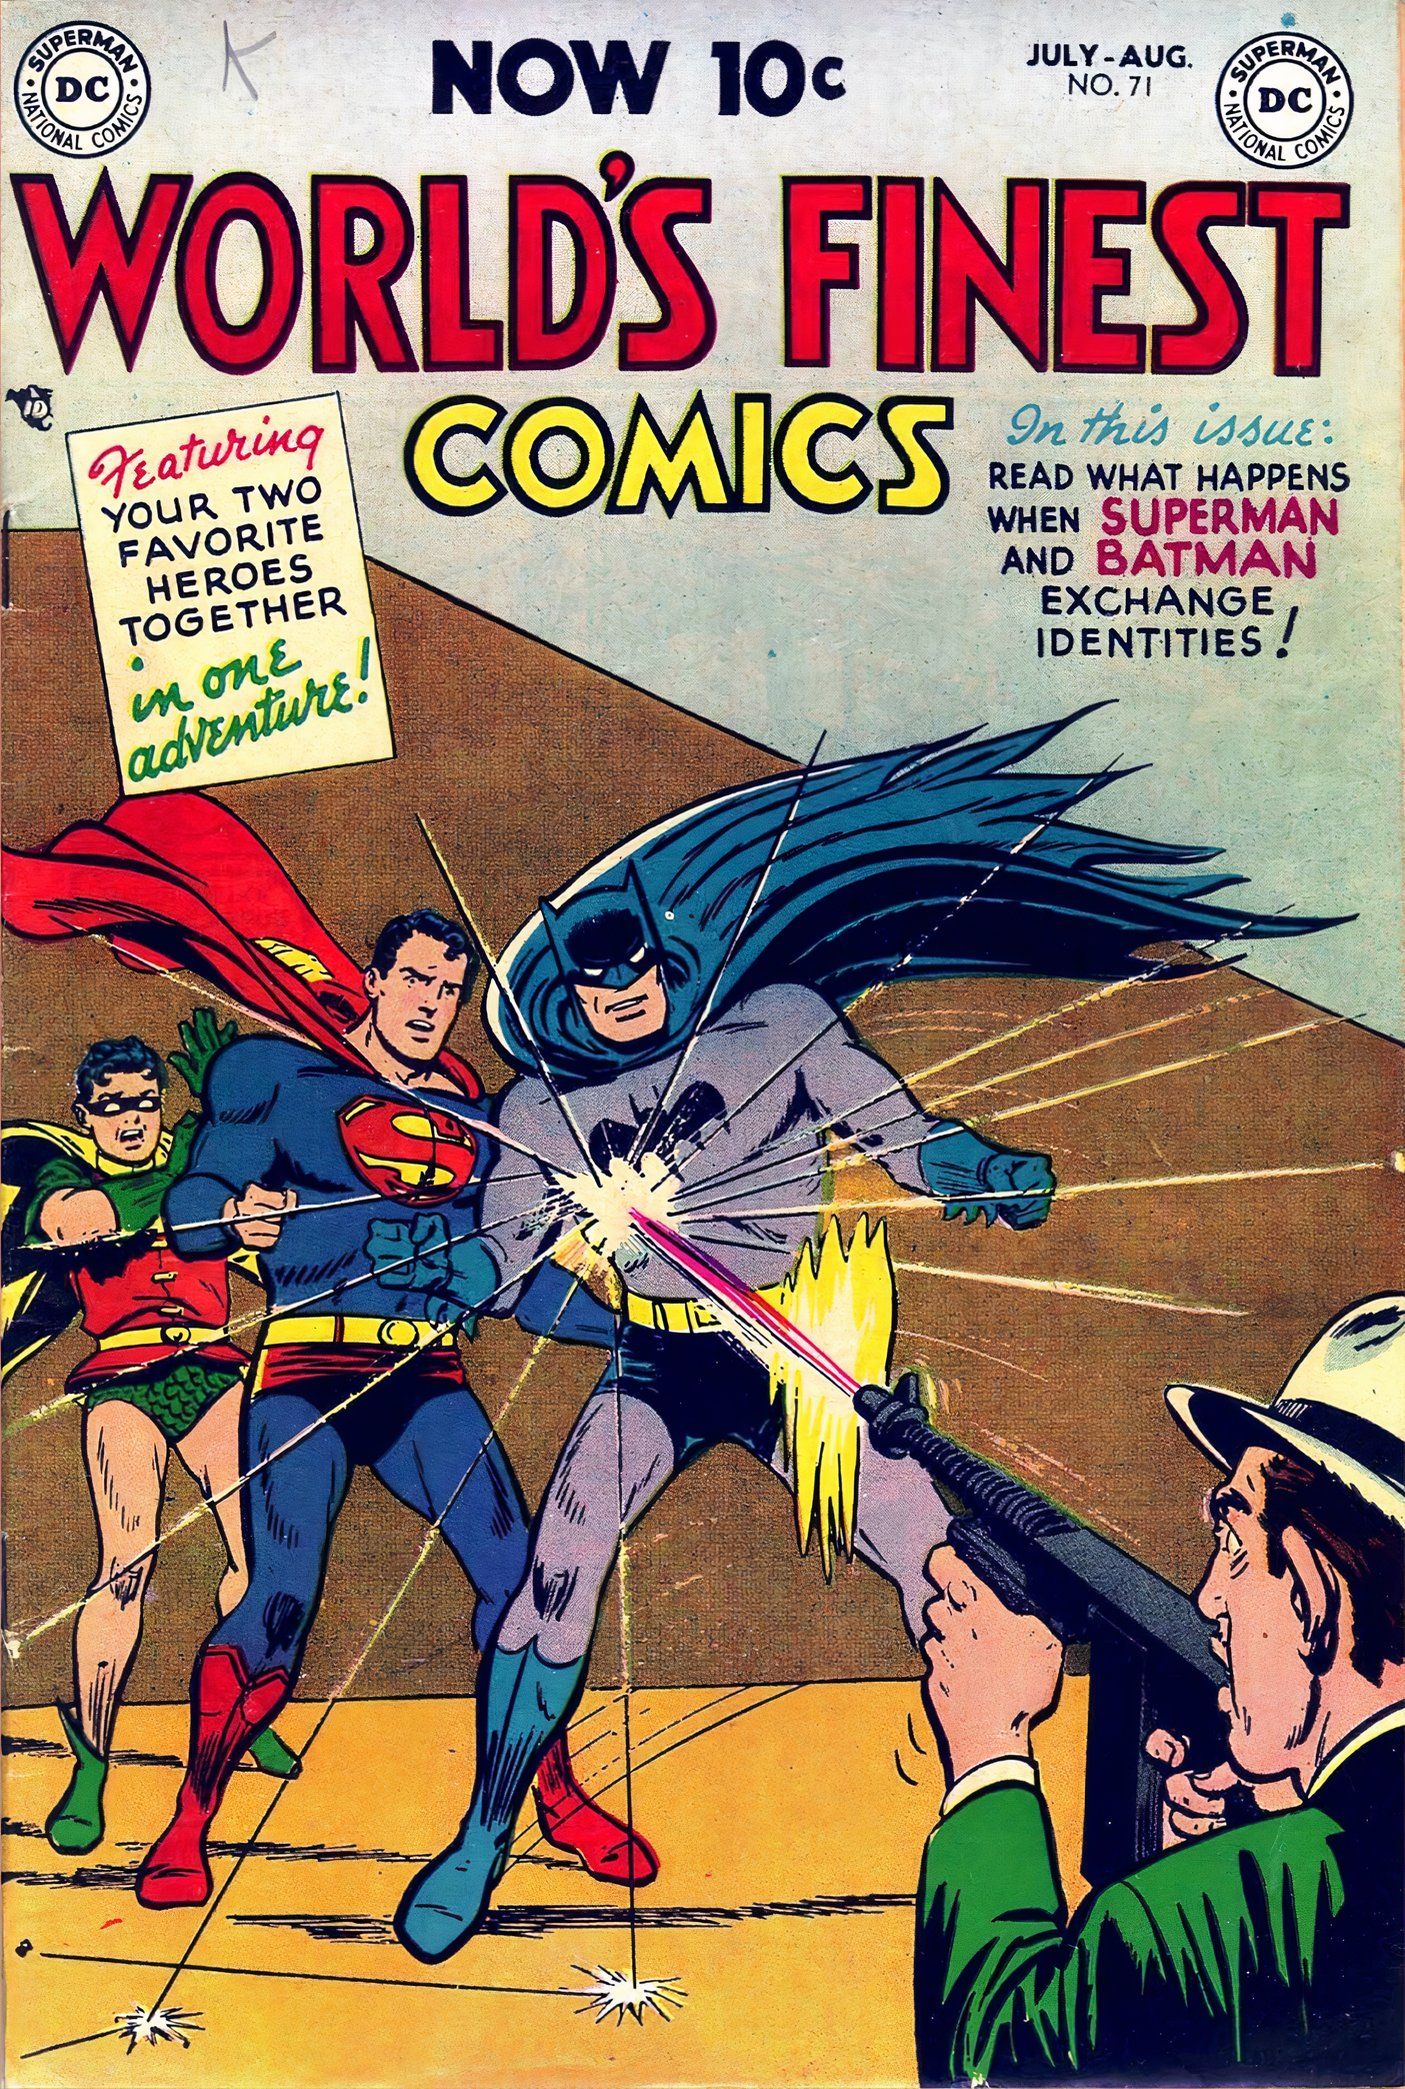 World's Finest Comics #71 Cover Batman stops a bullet for Superman.